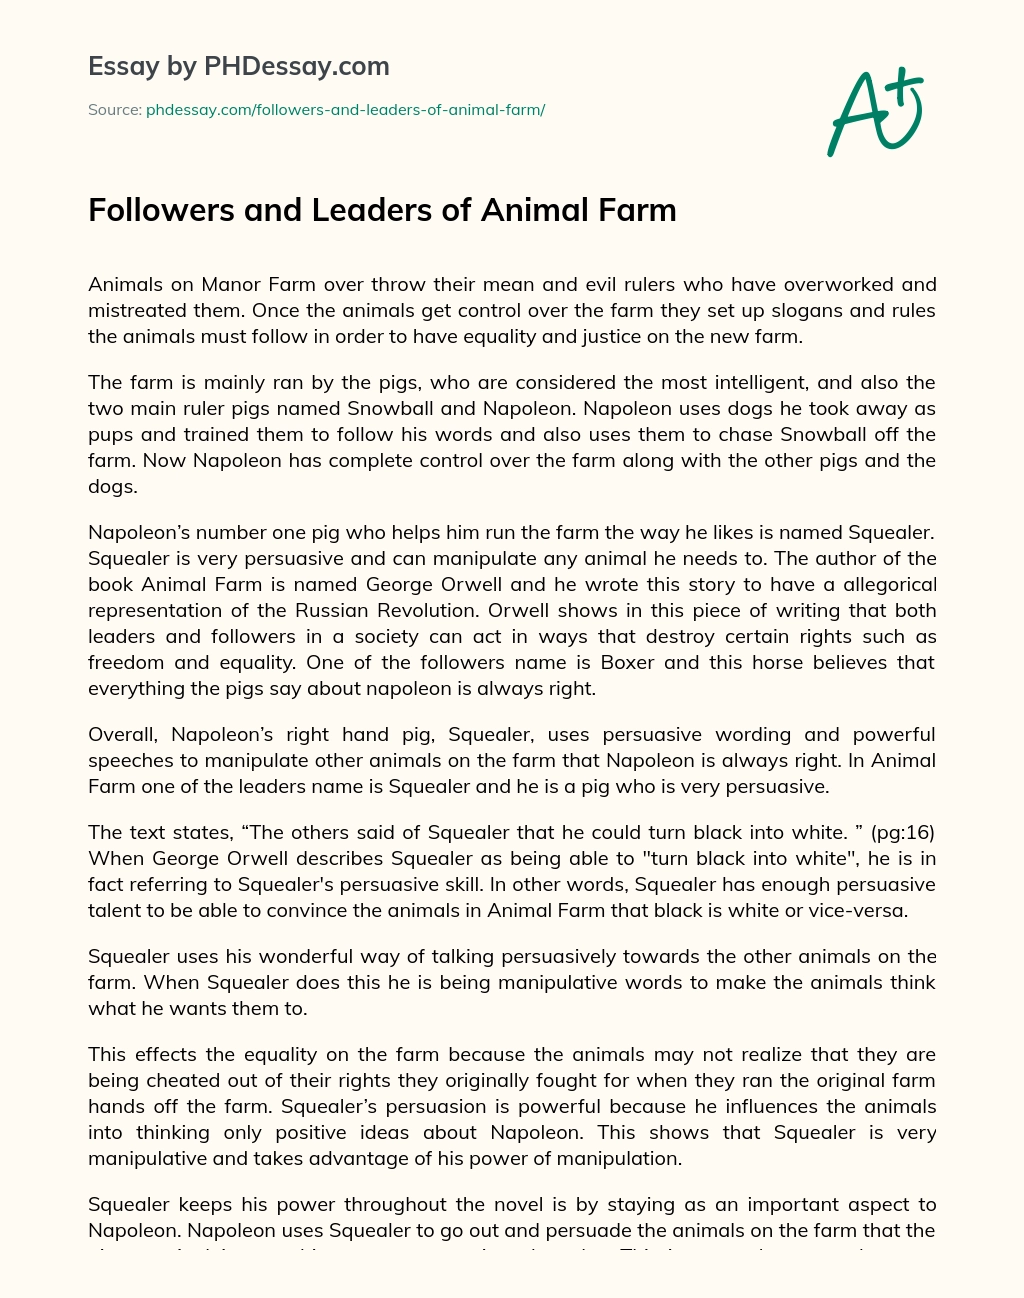 Followers and Leaders of Animal Farm essay